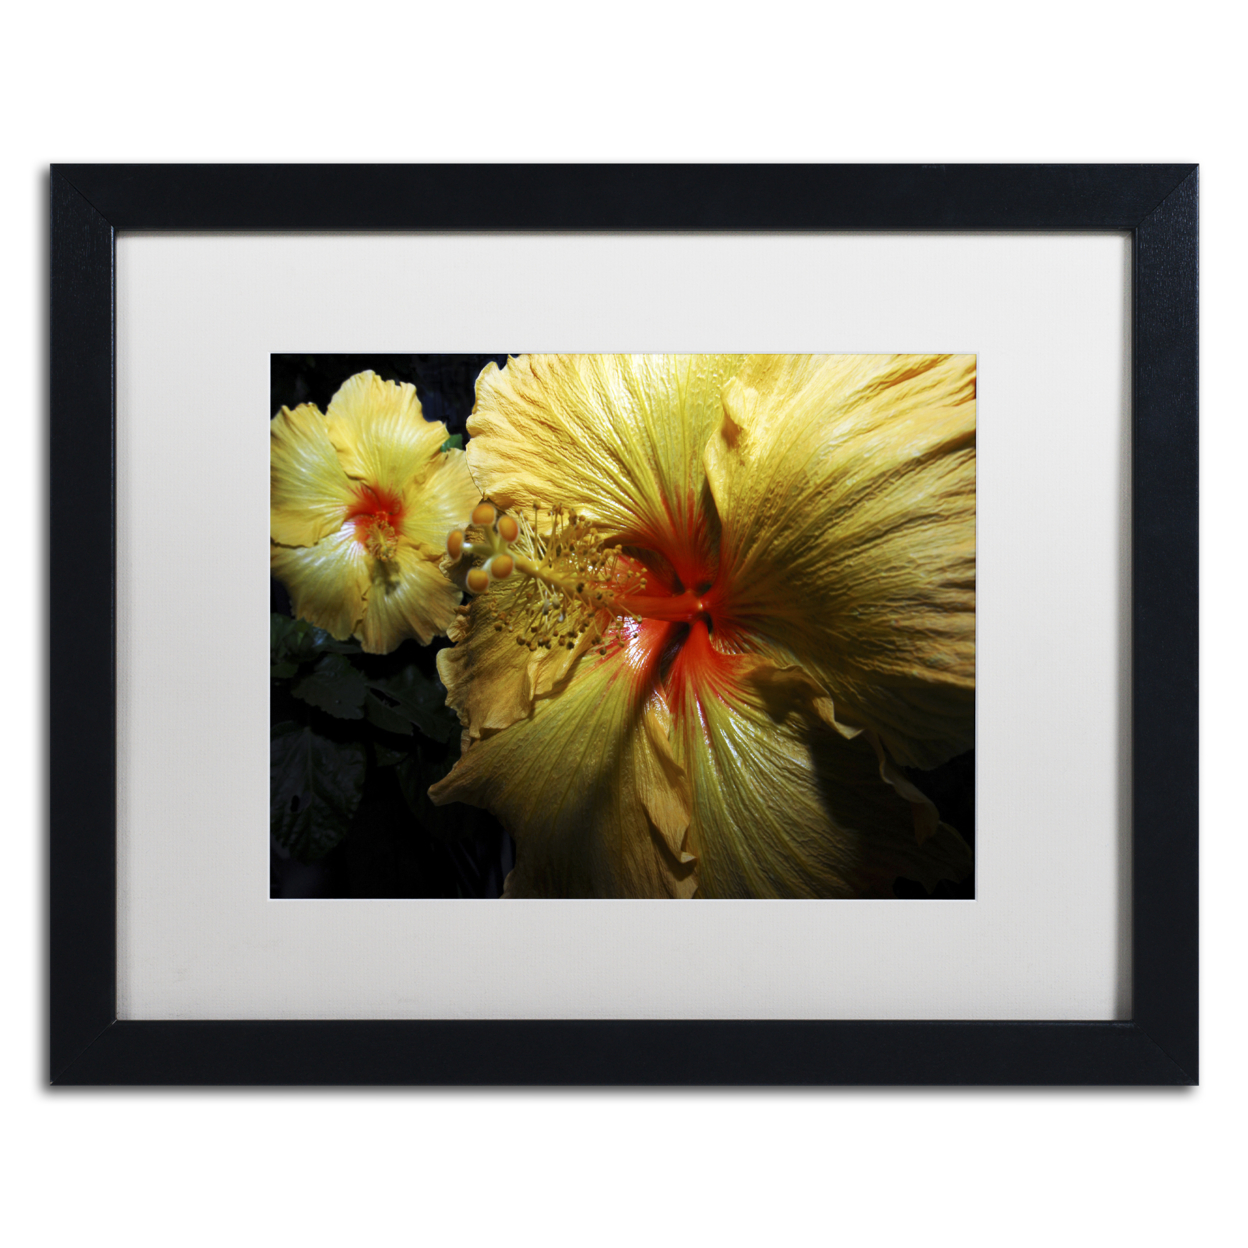 Kurt Shaffer 'Sunburst Hibiscus' Black Wooden Framed Art 18 X 22 Inches